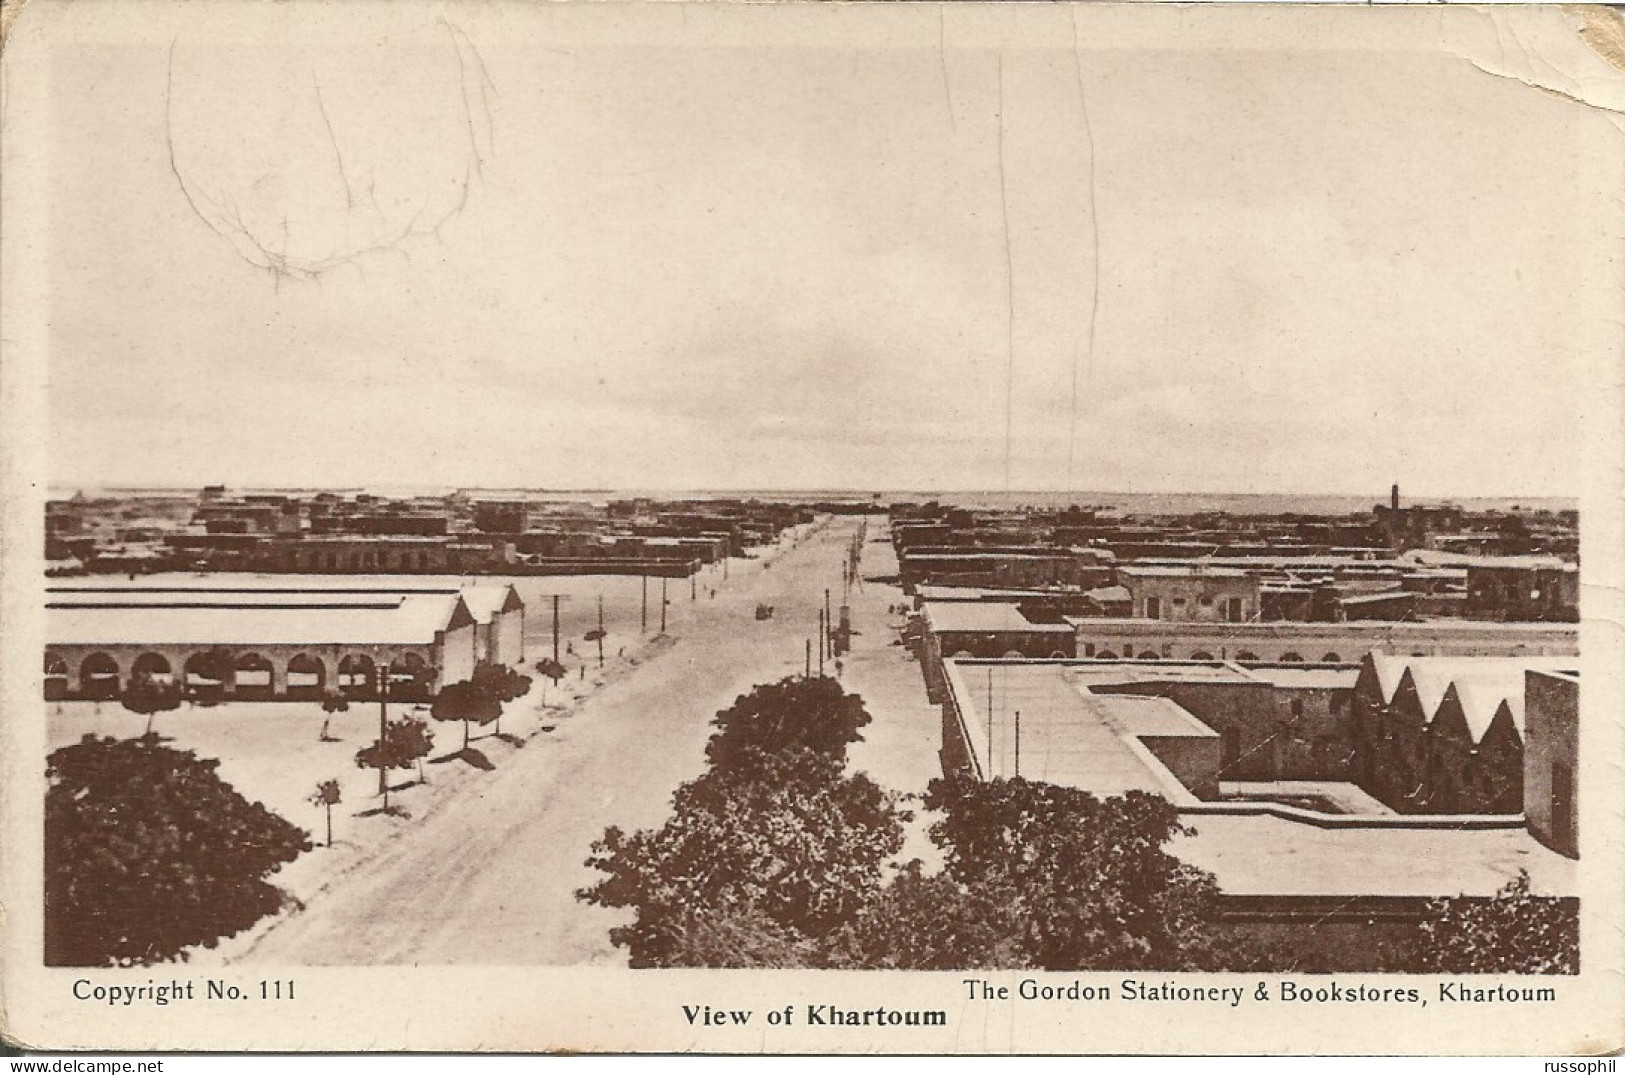 SOUDAN - SUDAN - VIEW OF KHARTOUM - PUB. THE GORDON STATIONERY AND BOOKSTORE N° 111 - 1927 - Sudan